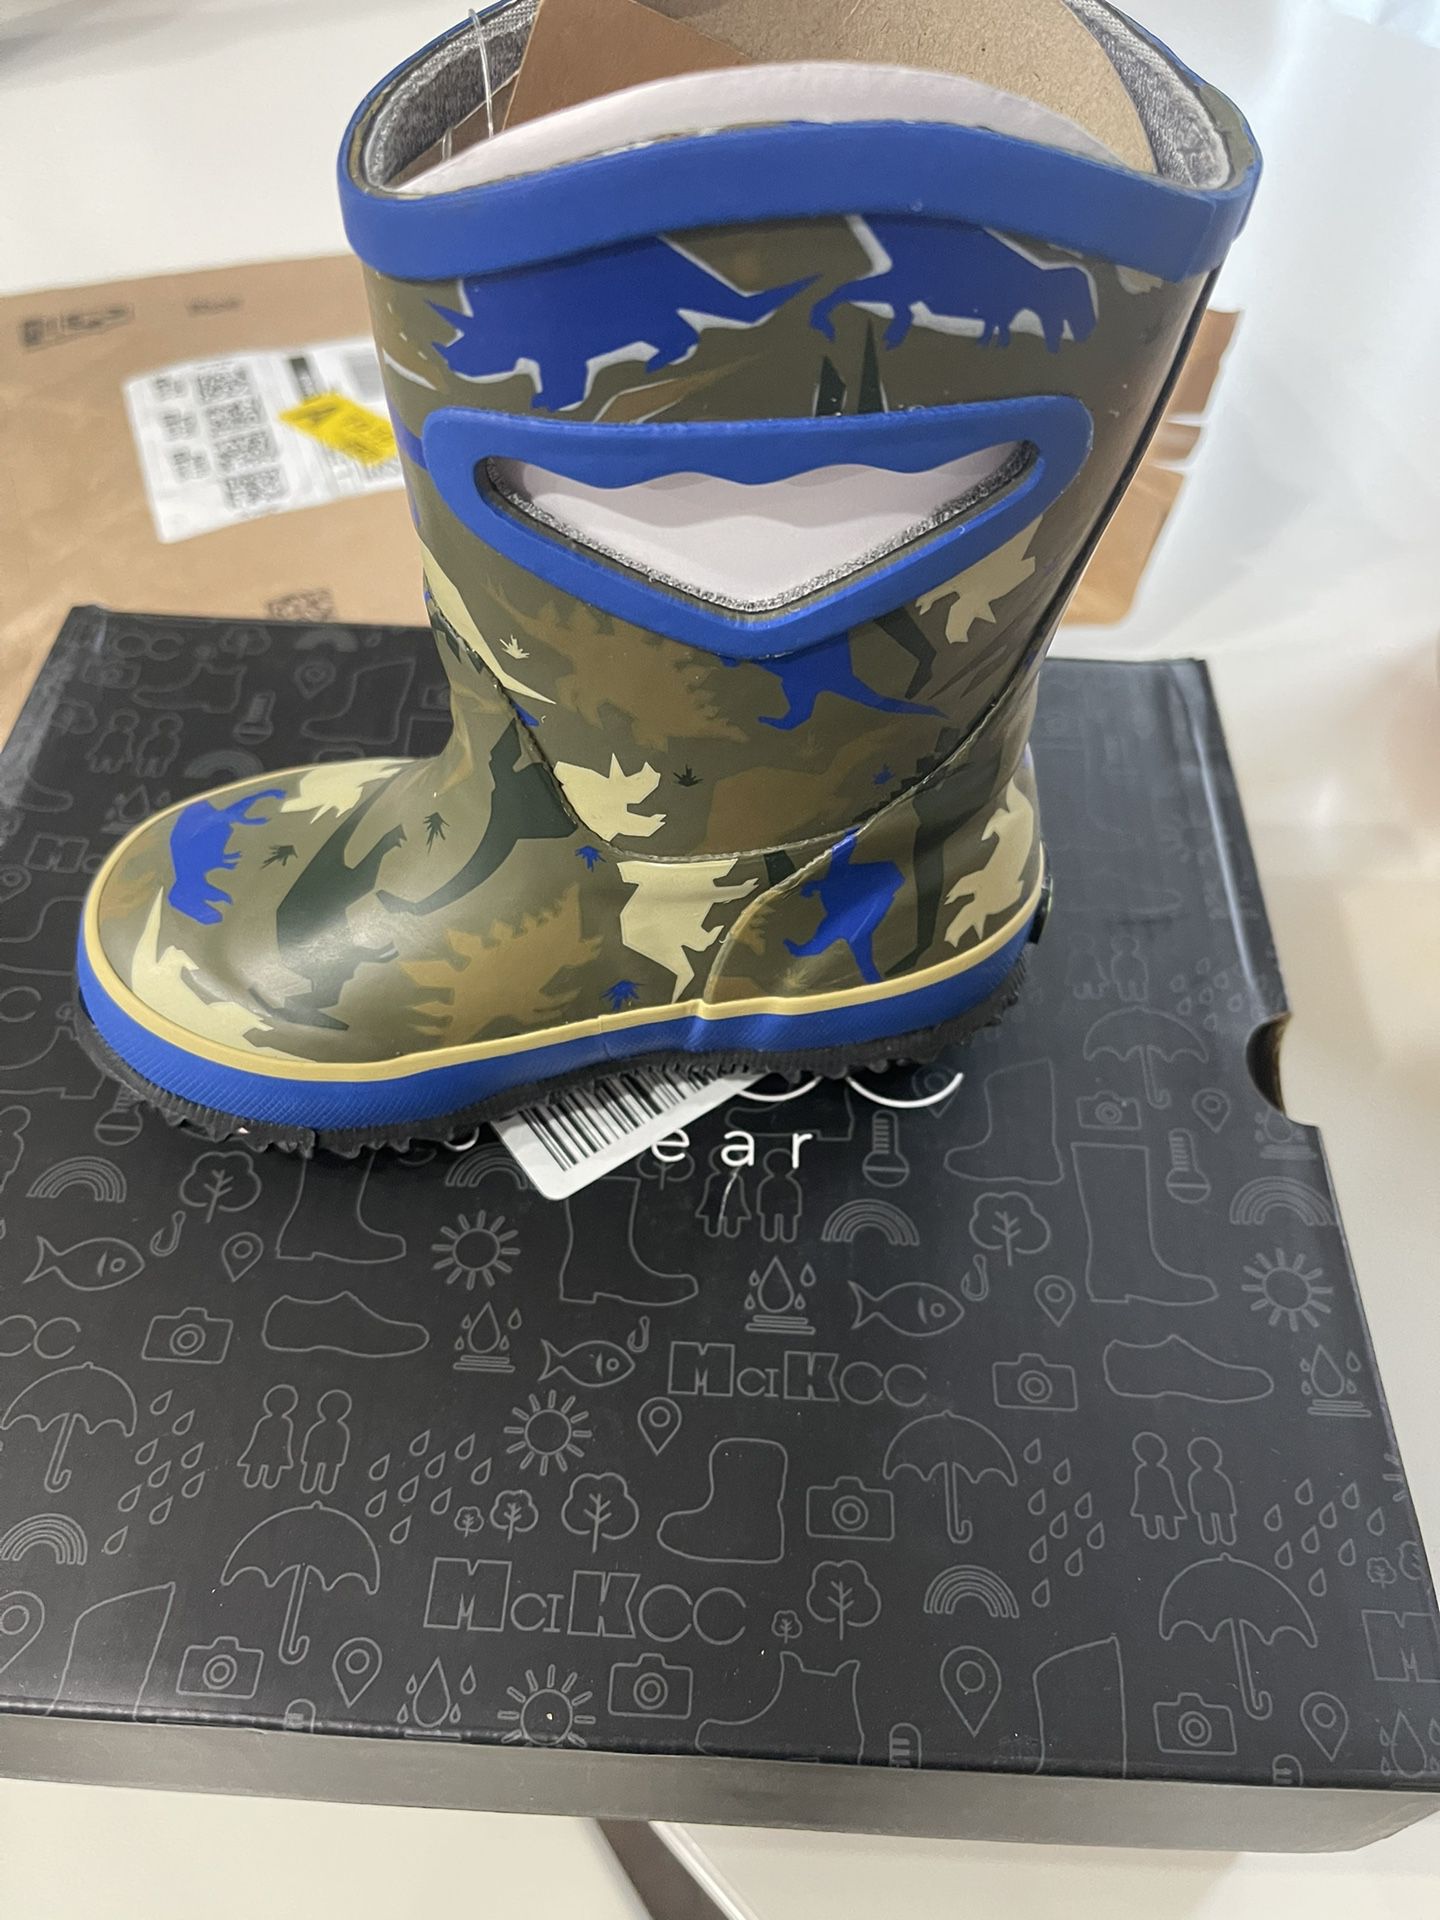 Toddler rain Boots 